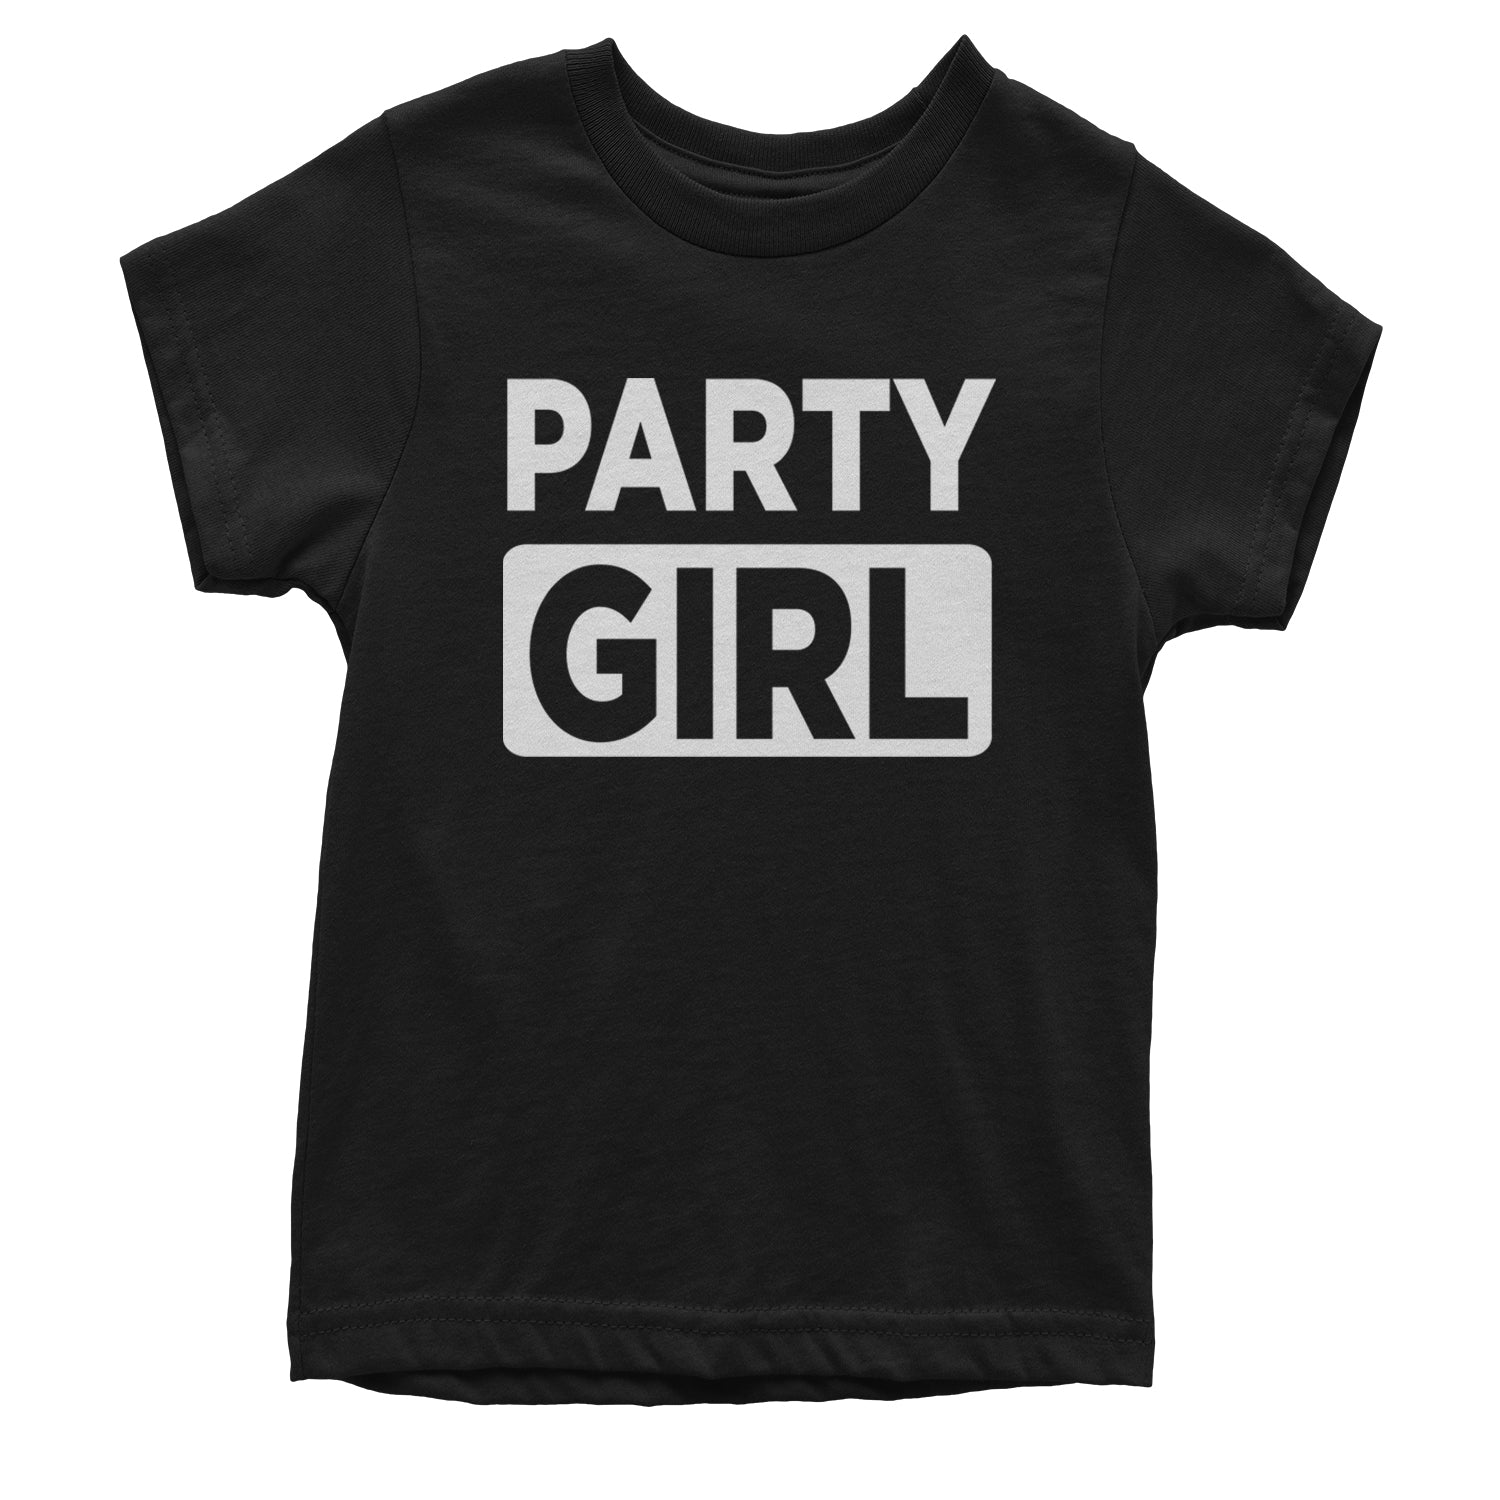 Party Girl Club Brat Youth T-shirt